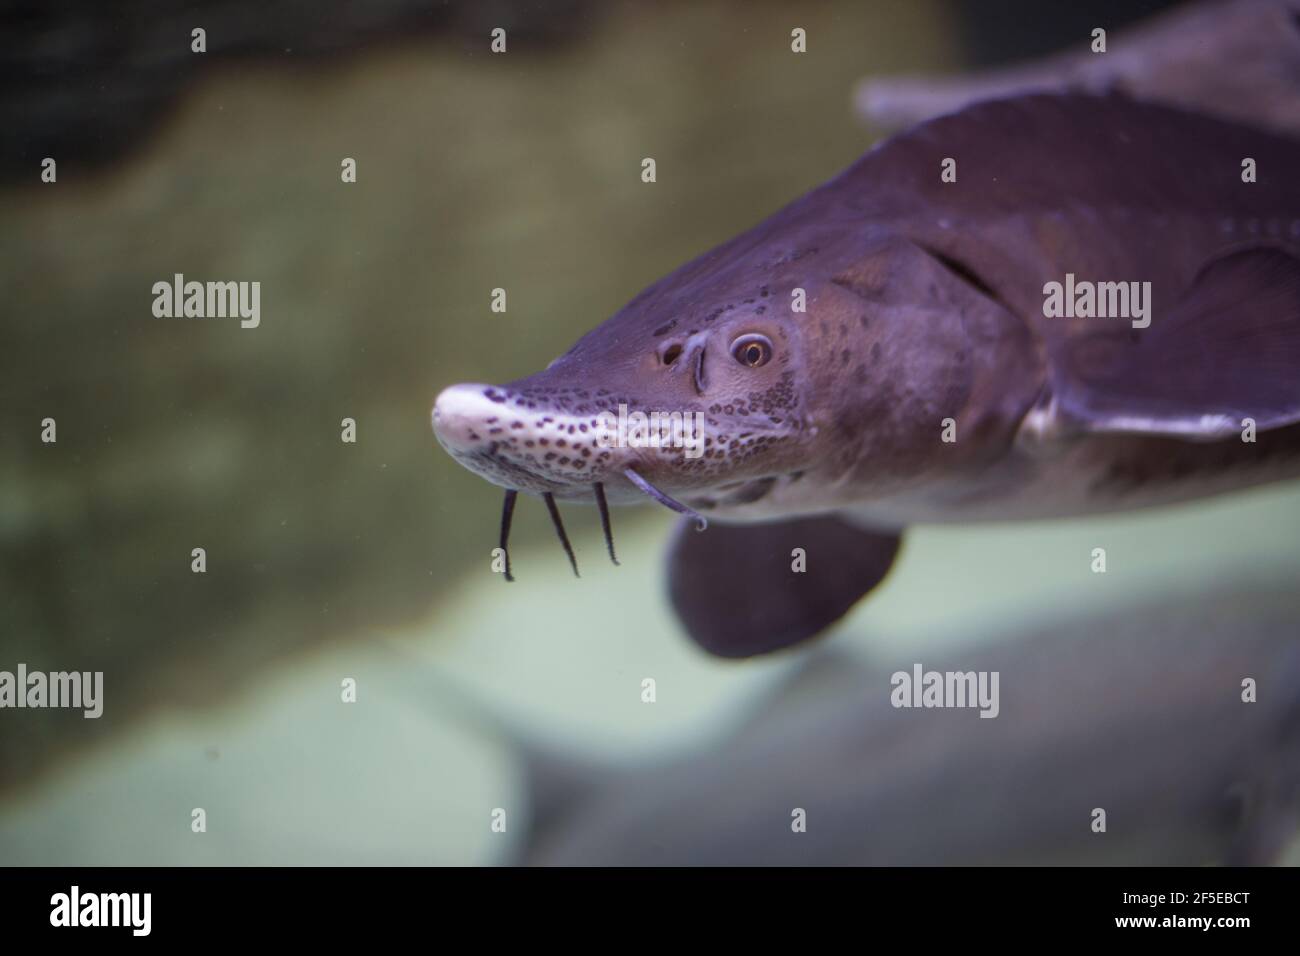 big sturgeon fish swims in water, behind glass in an aquarium Stock Photo